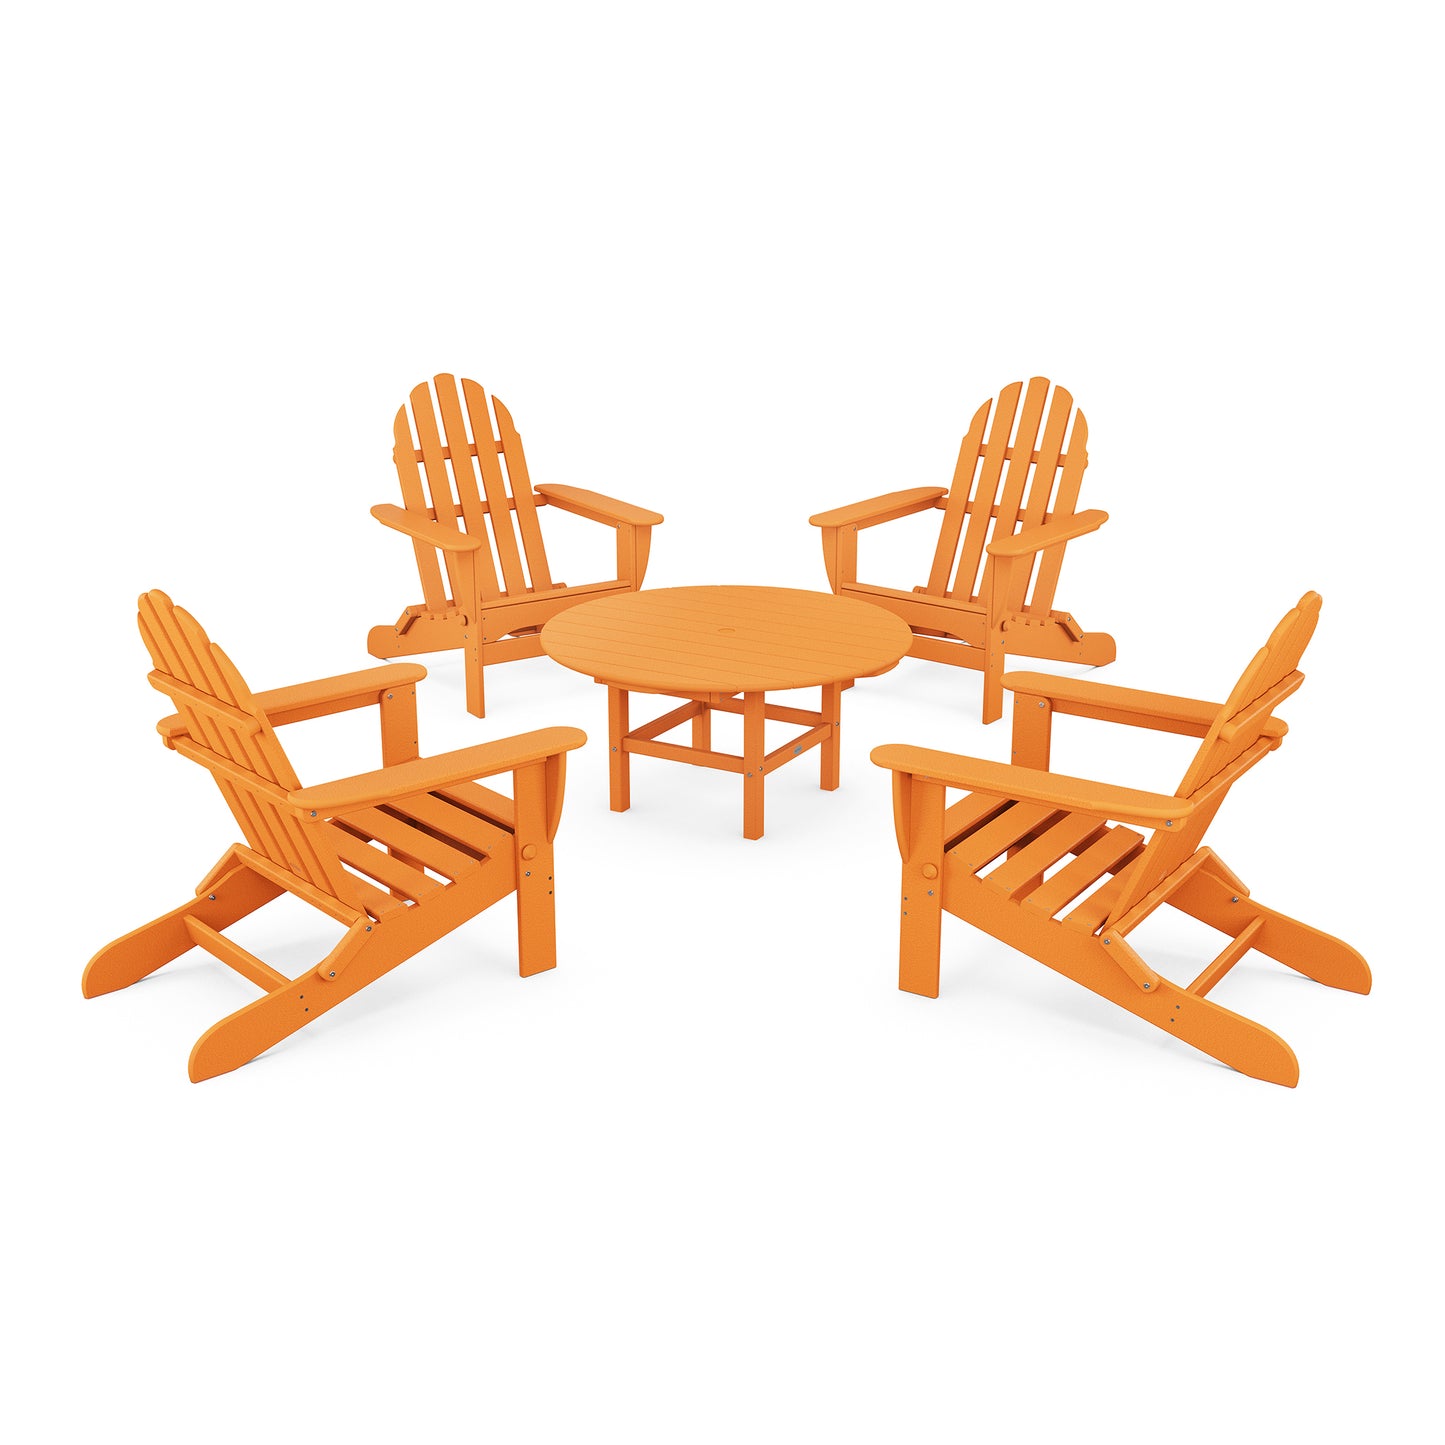 Five orange POLYWOOD Classic Folding Adirondack chairs arranged around a small matching circular table, set on a plain white background.